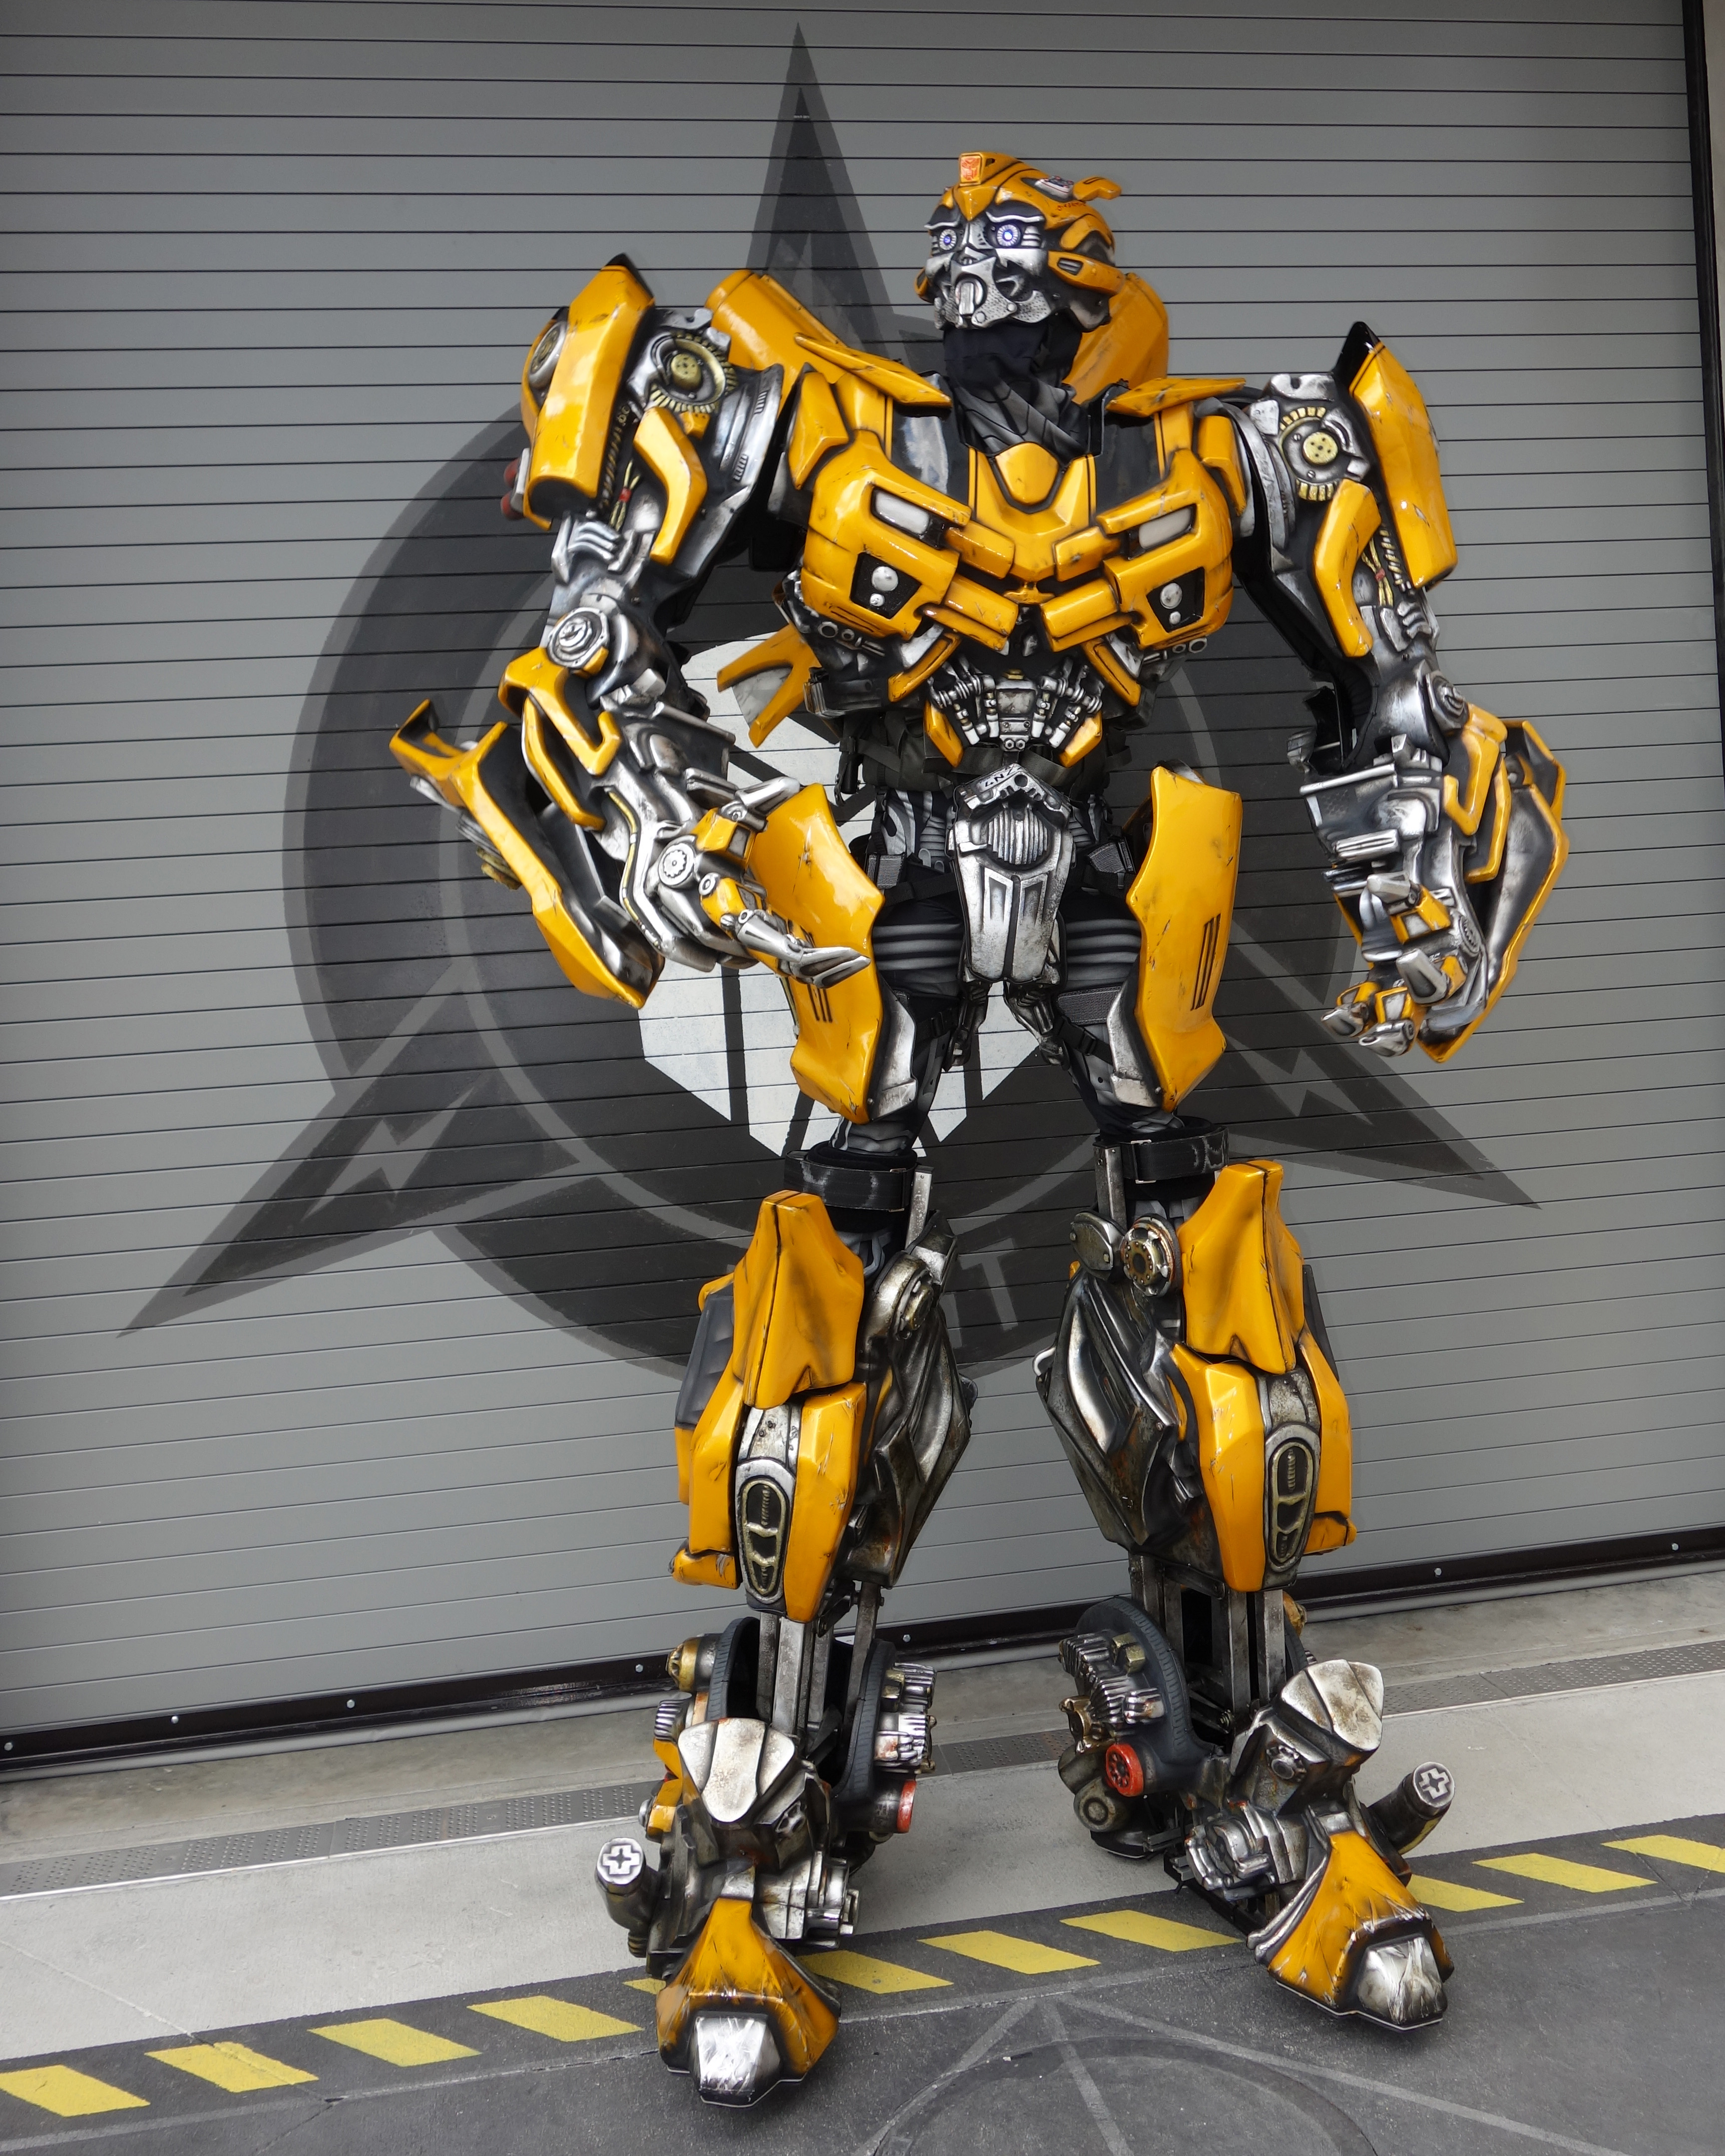 universal-studios-orlando-transformers-bumblebee-meet-and-greet-3.jpg